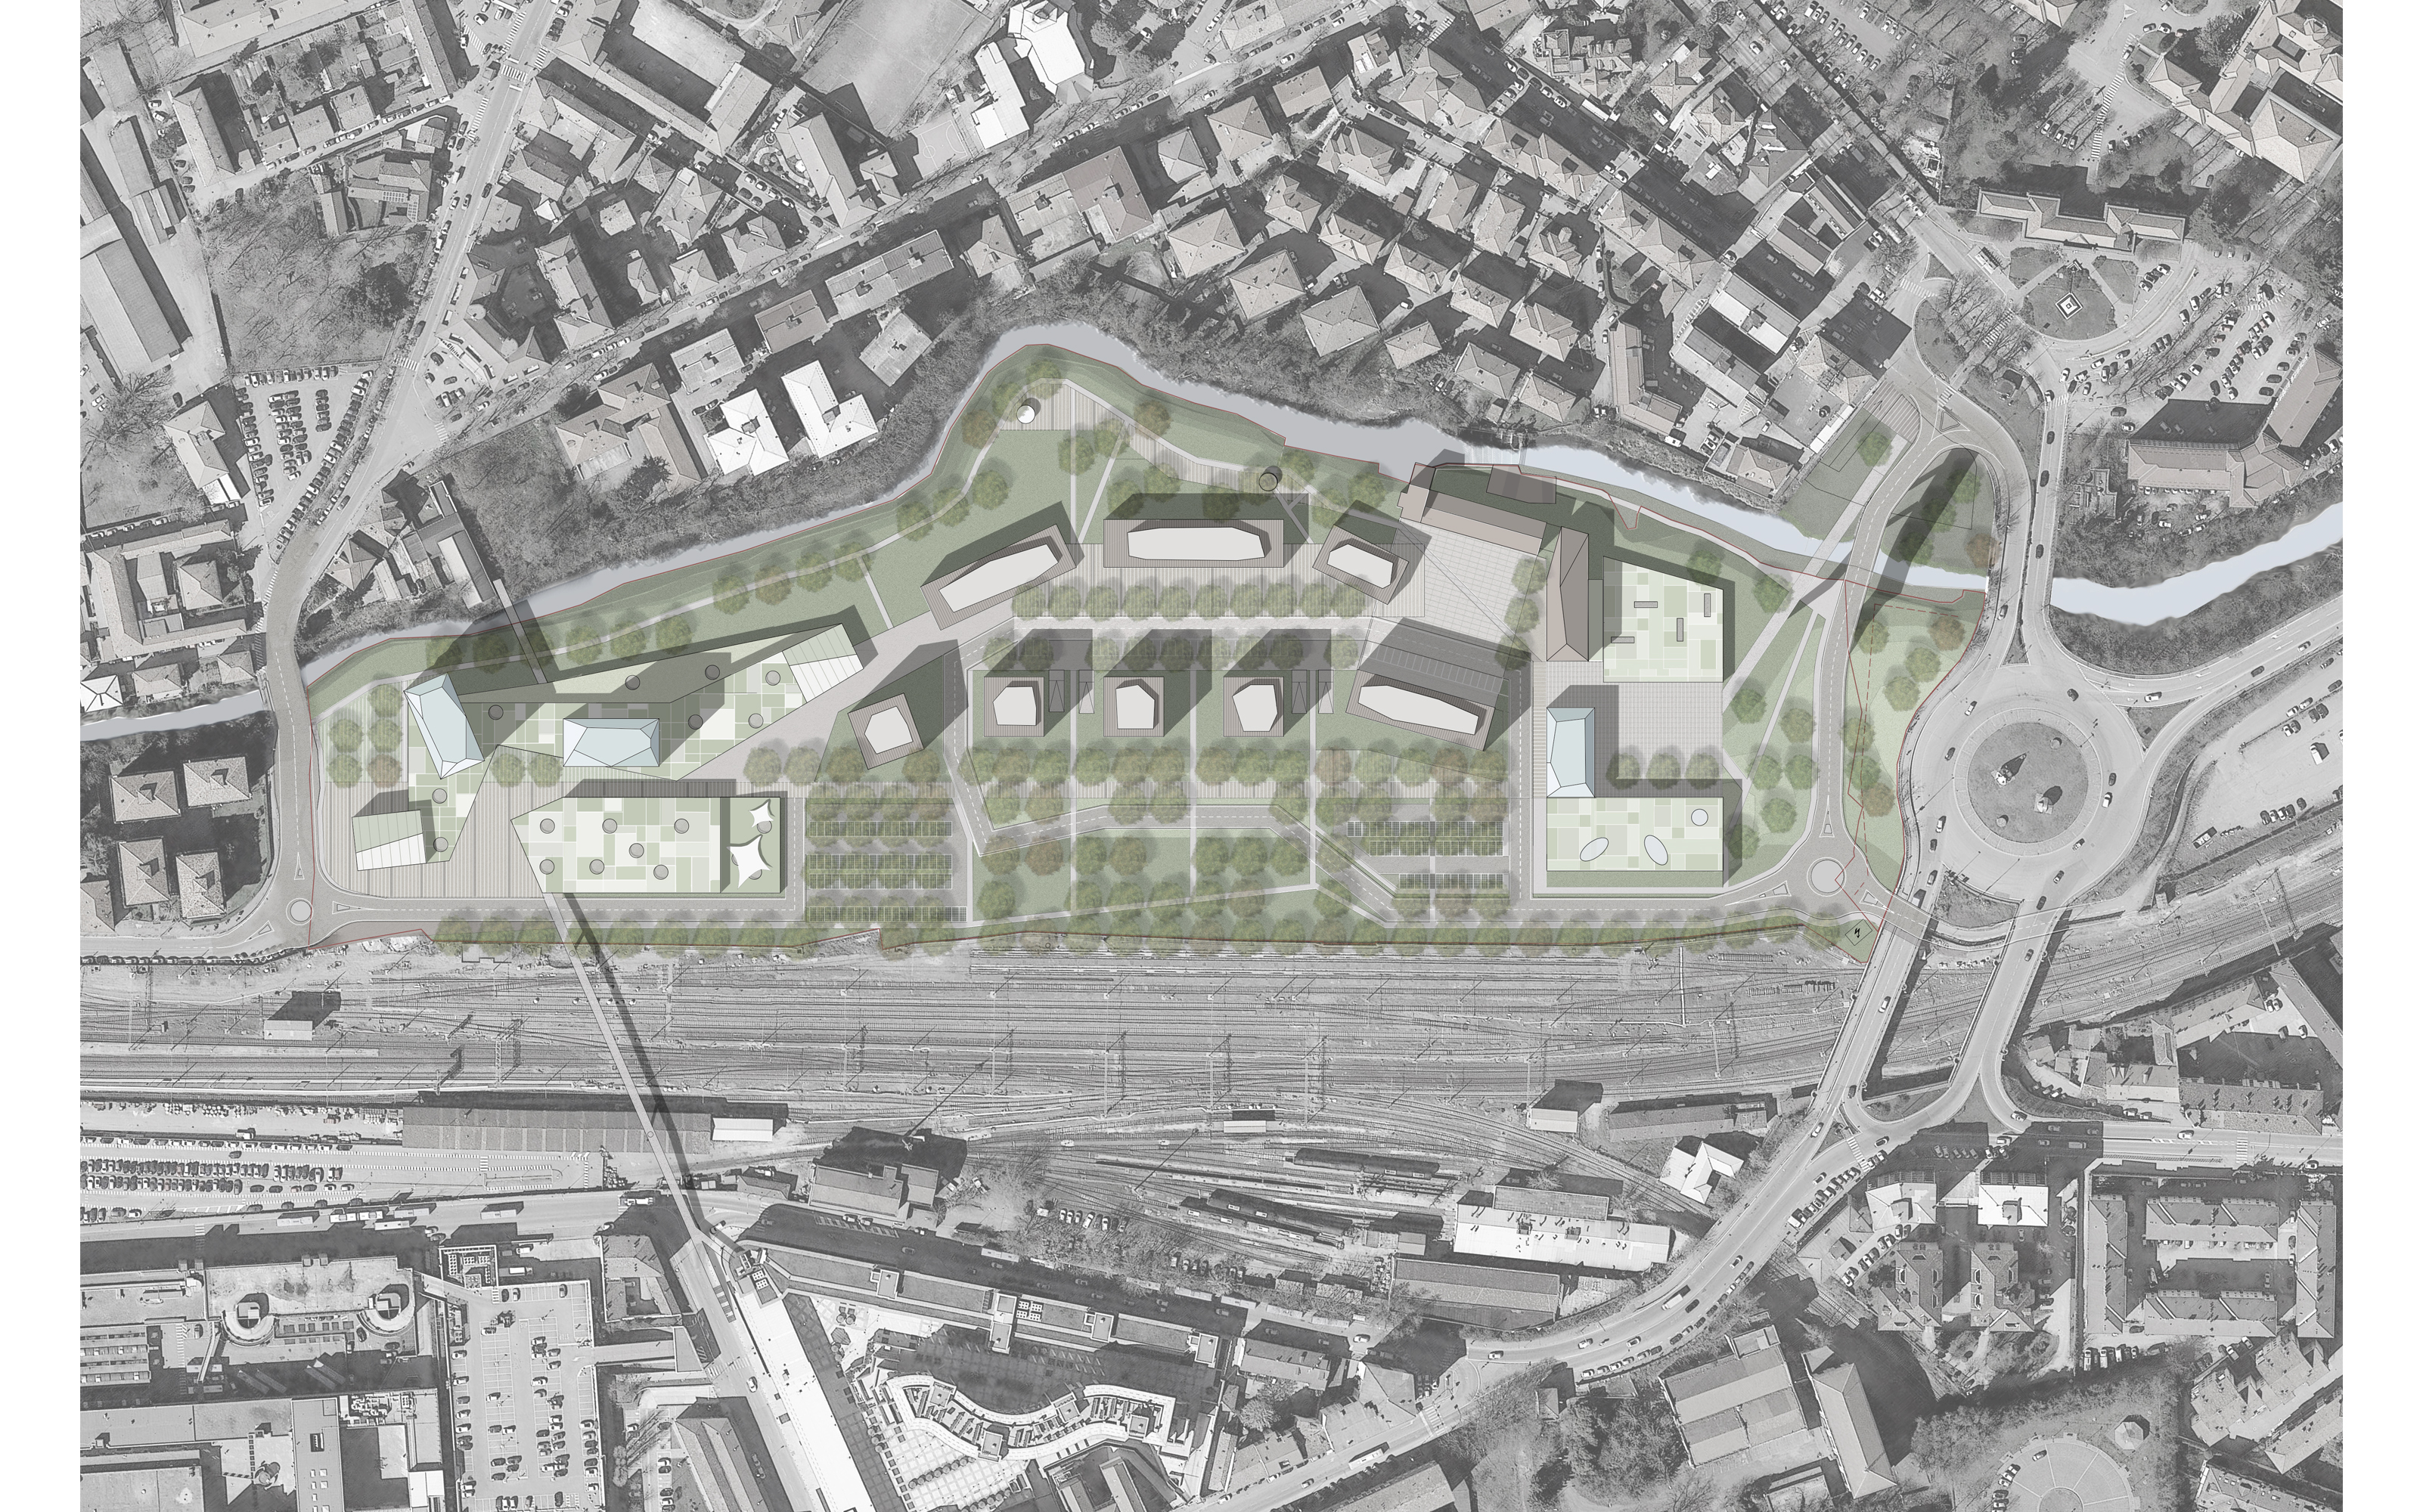 Green city masterplan / Pavia